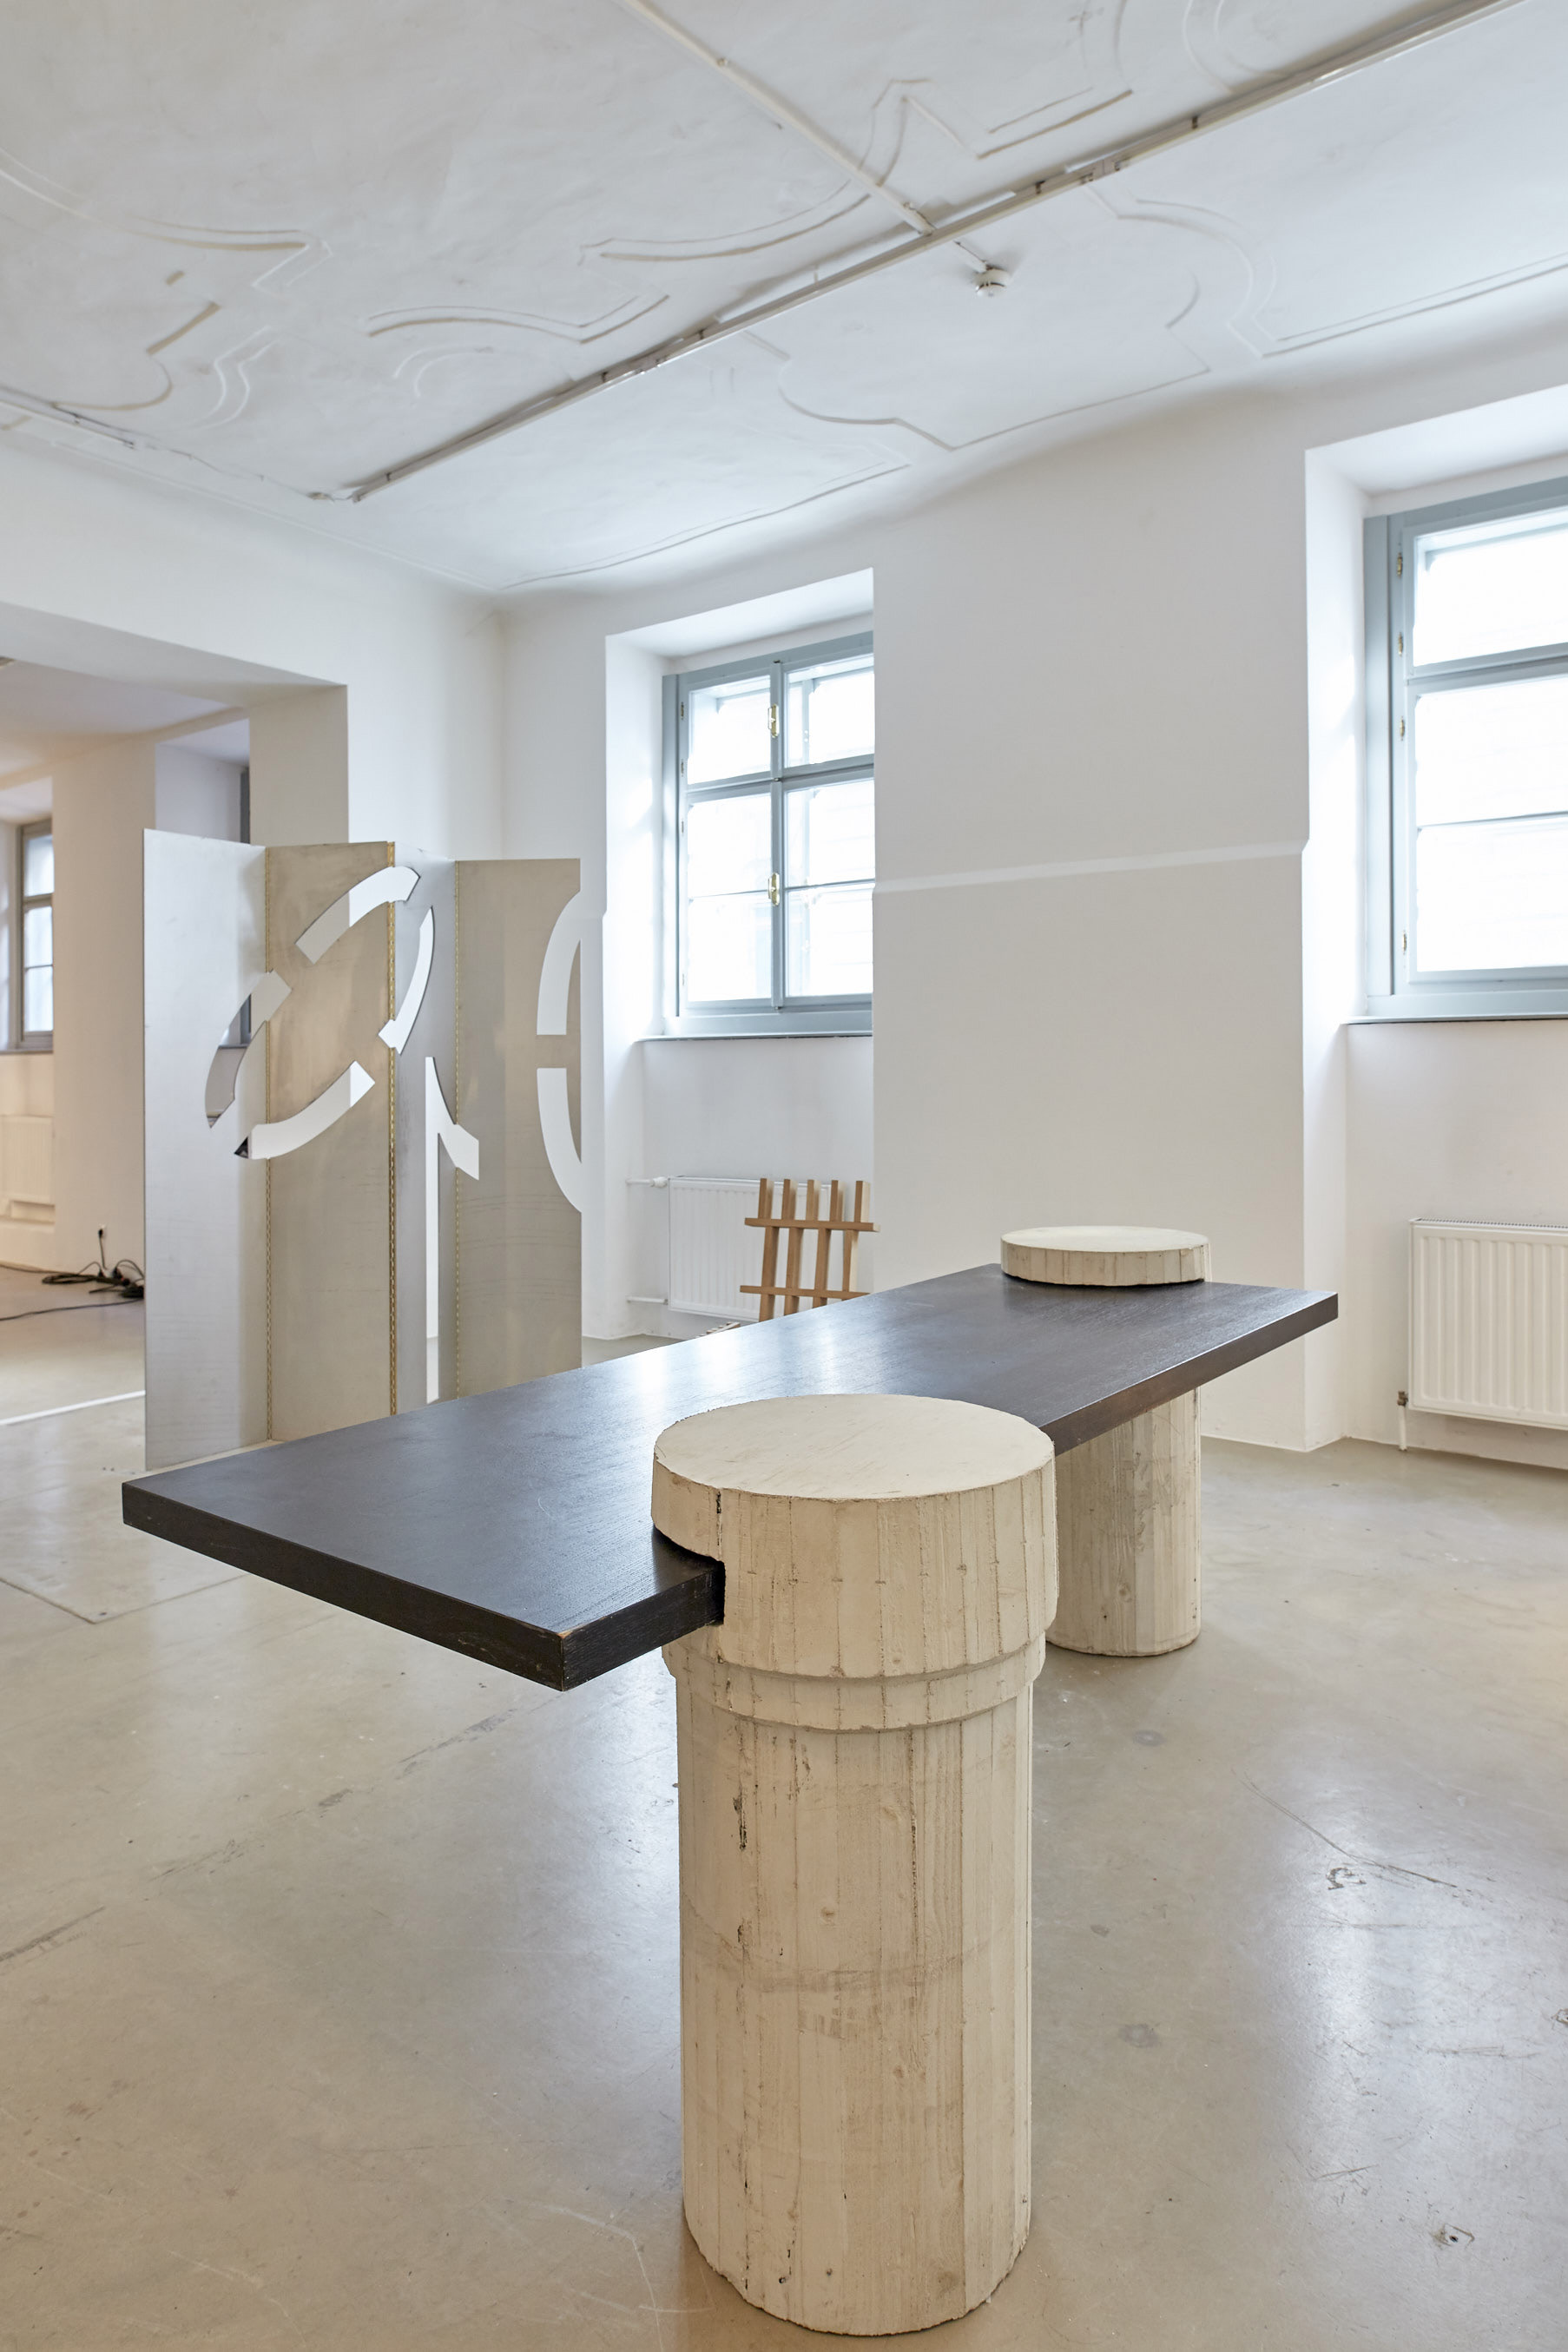 Grazer Kunstverein is moving